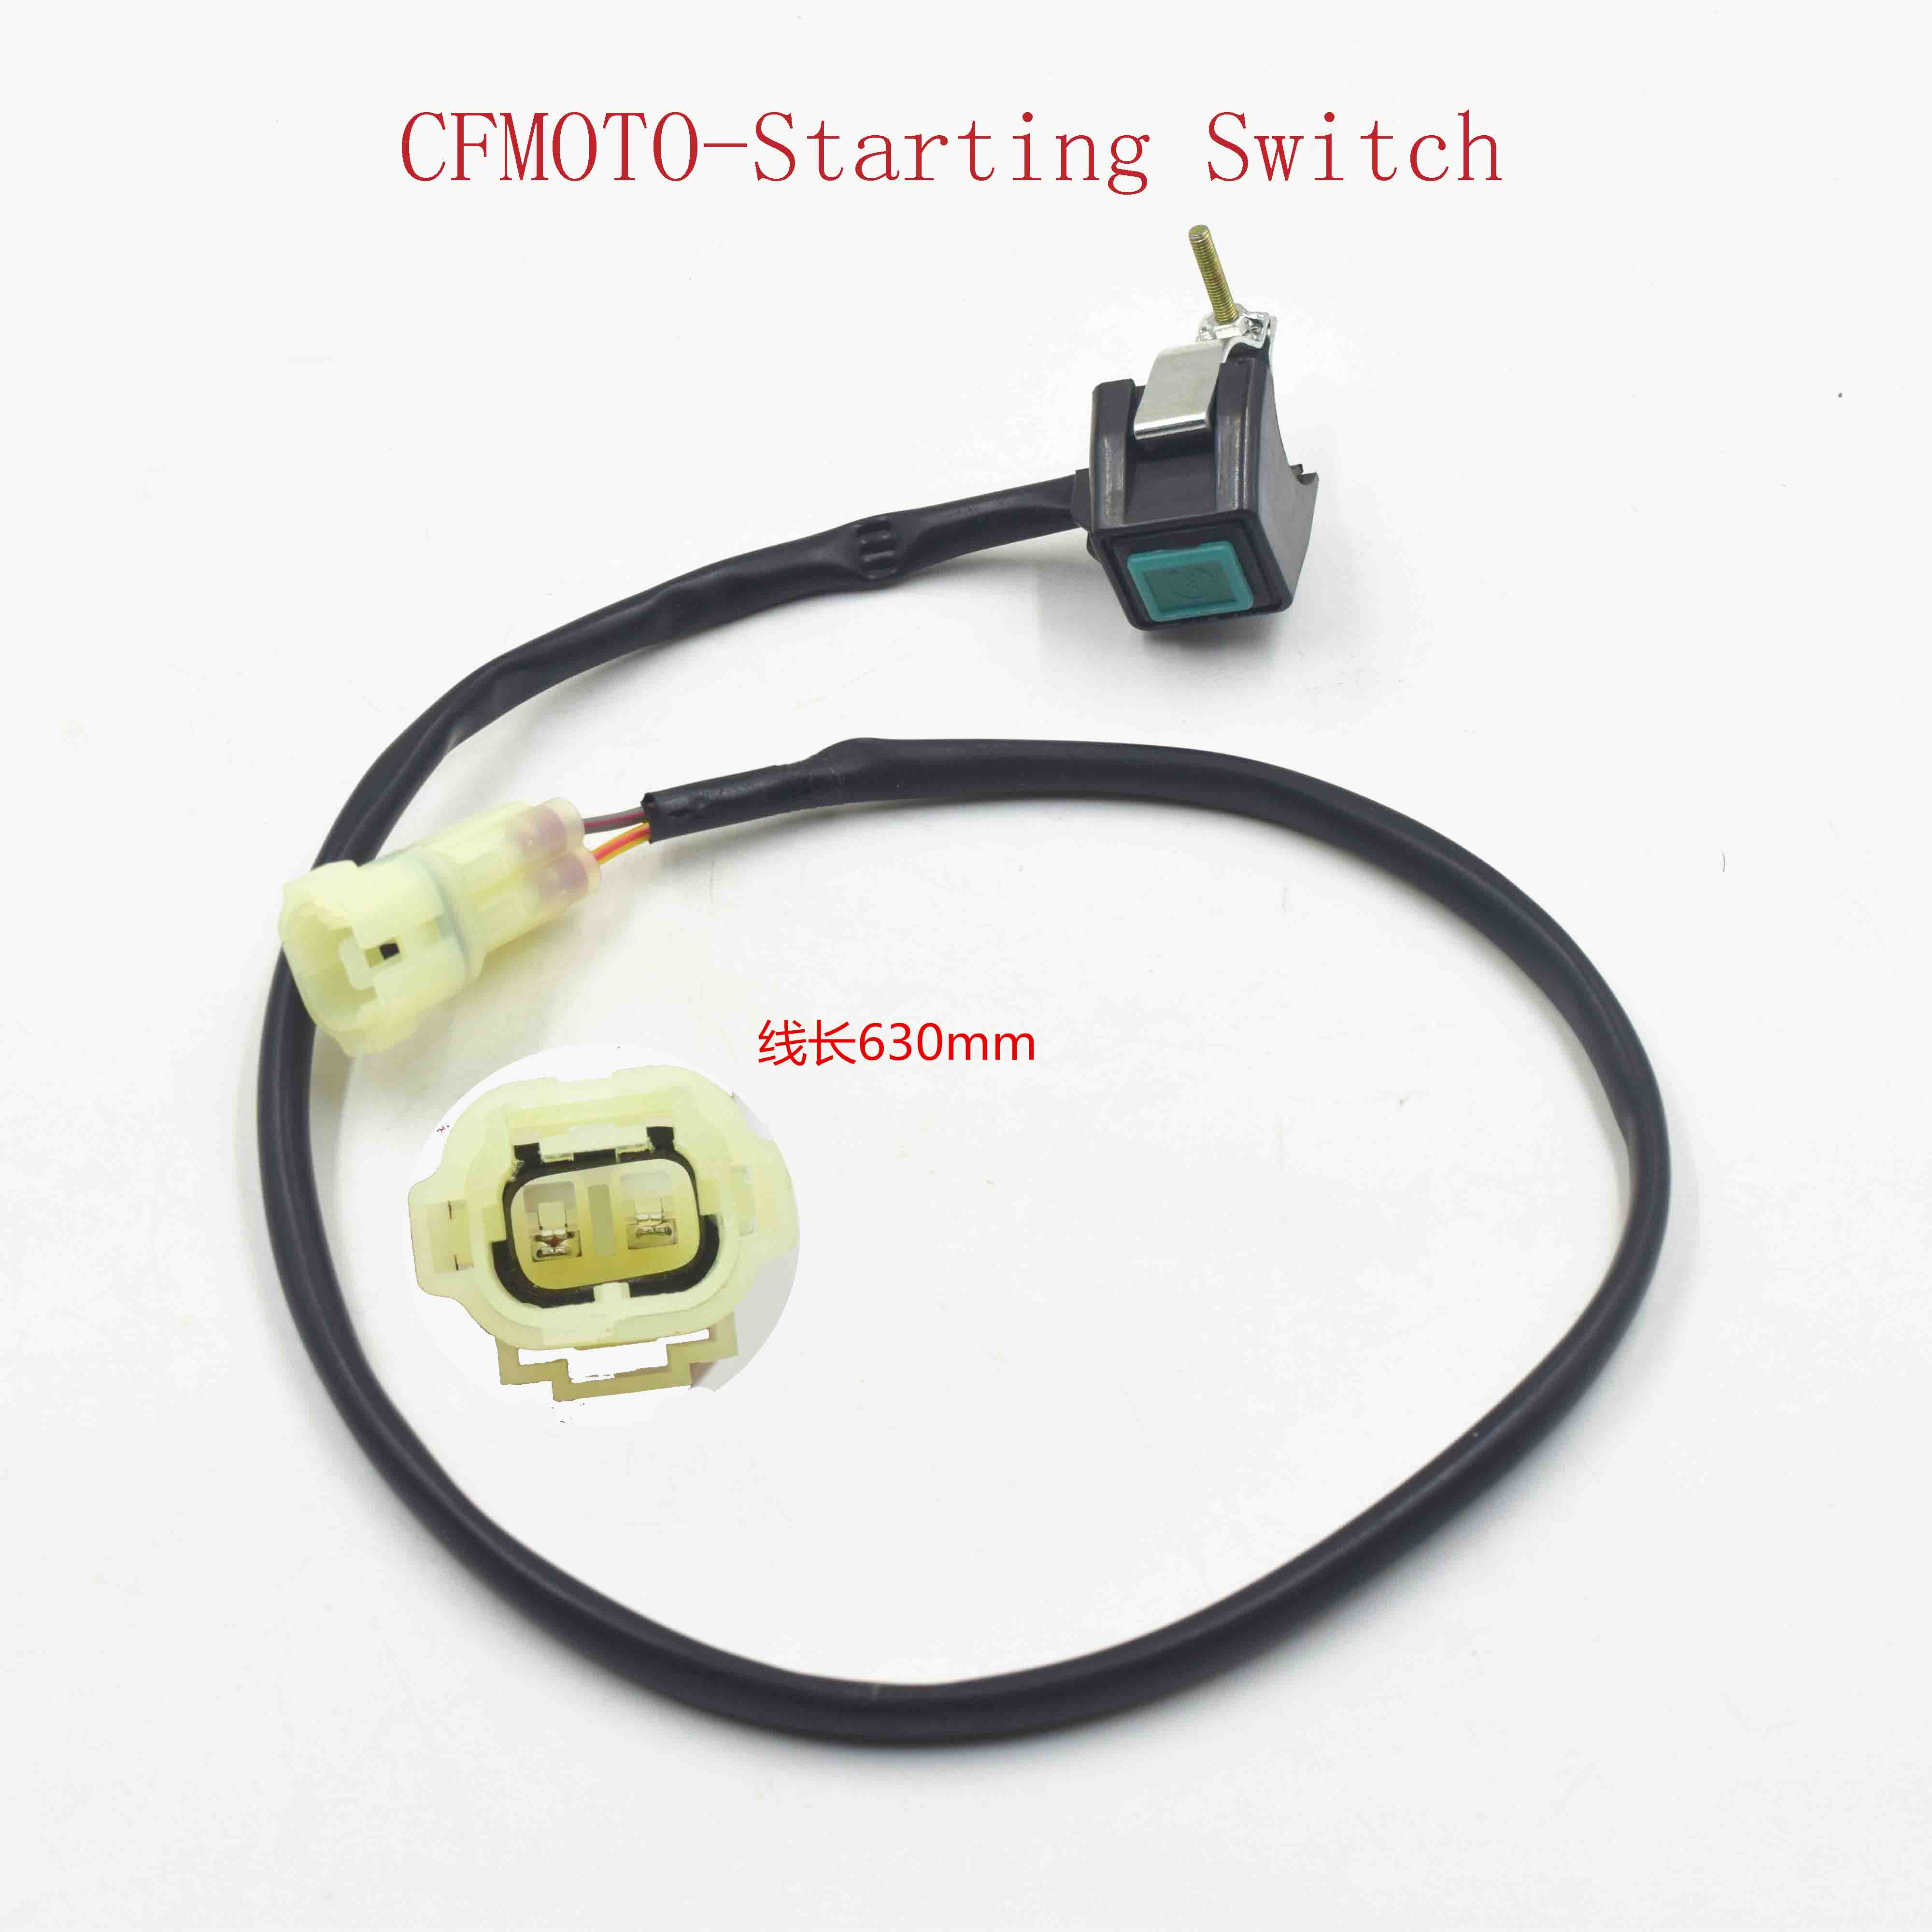 CFMOTO-Starting Switch 